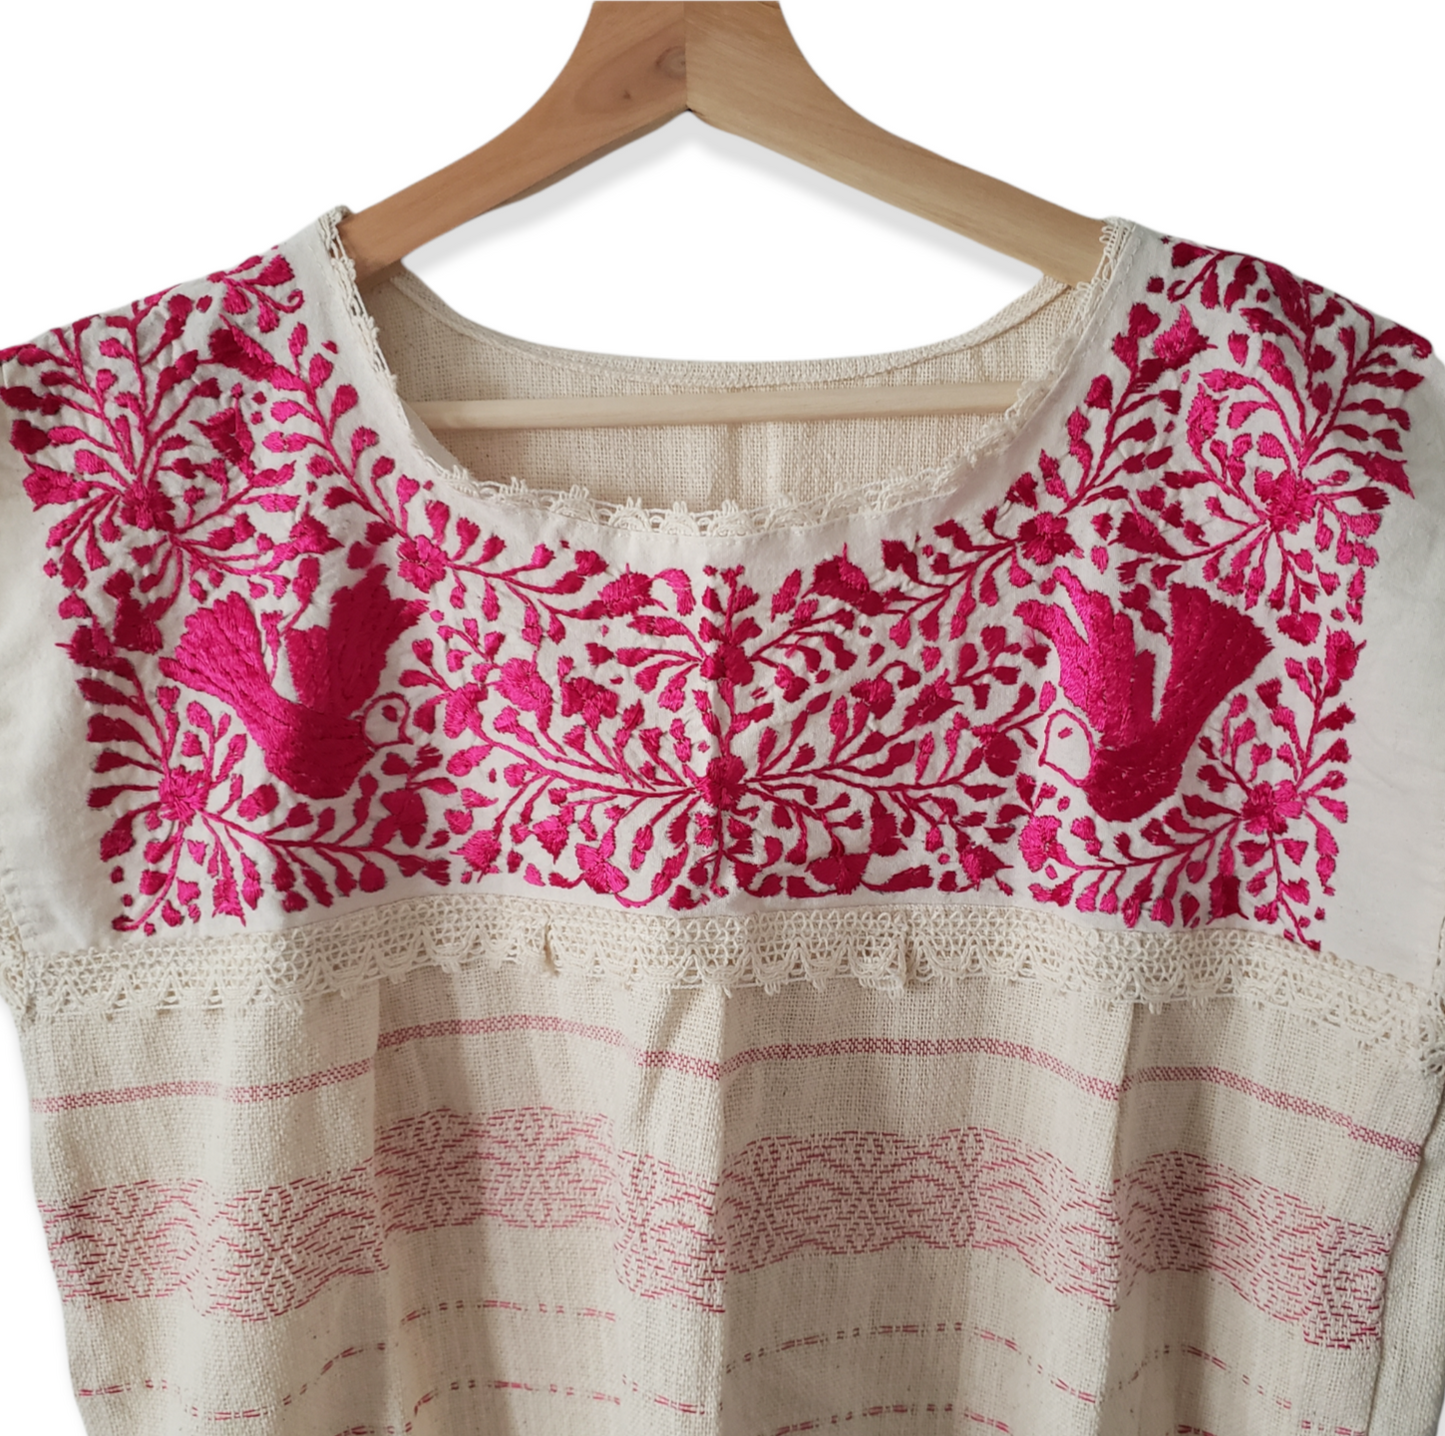 Handmade Woven Mexican Colorful Dove Bird Shirt from Oaxaca